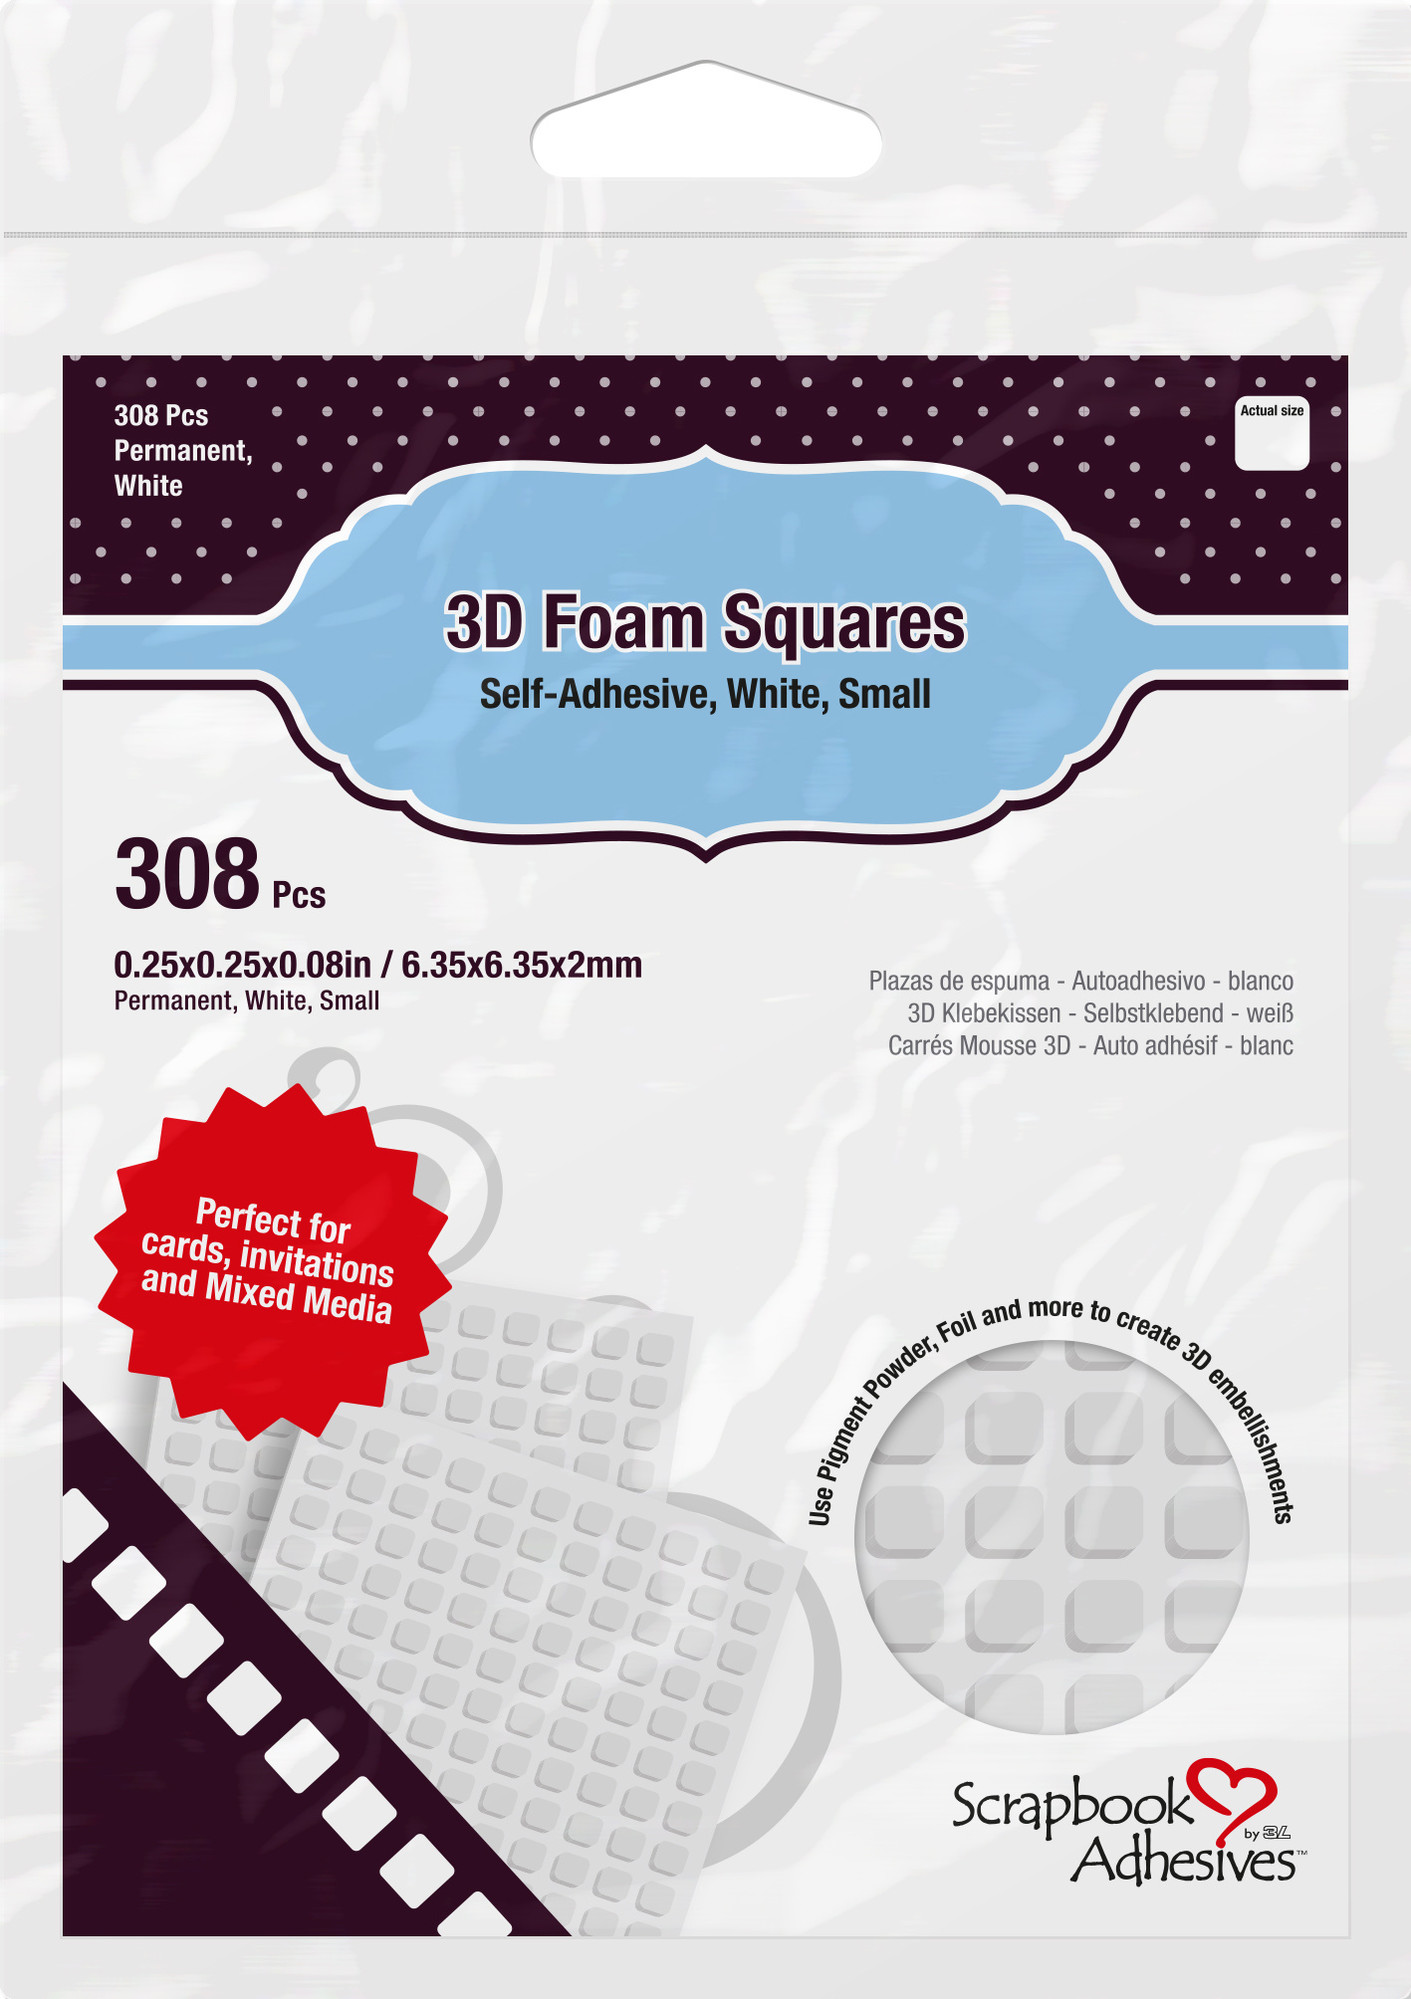 Scrapbook Adhesives 3D Foam Squares White Small (308pcs)